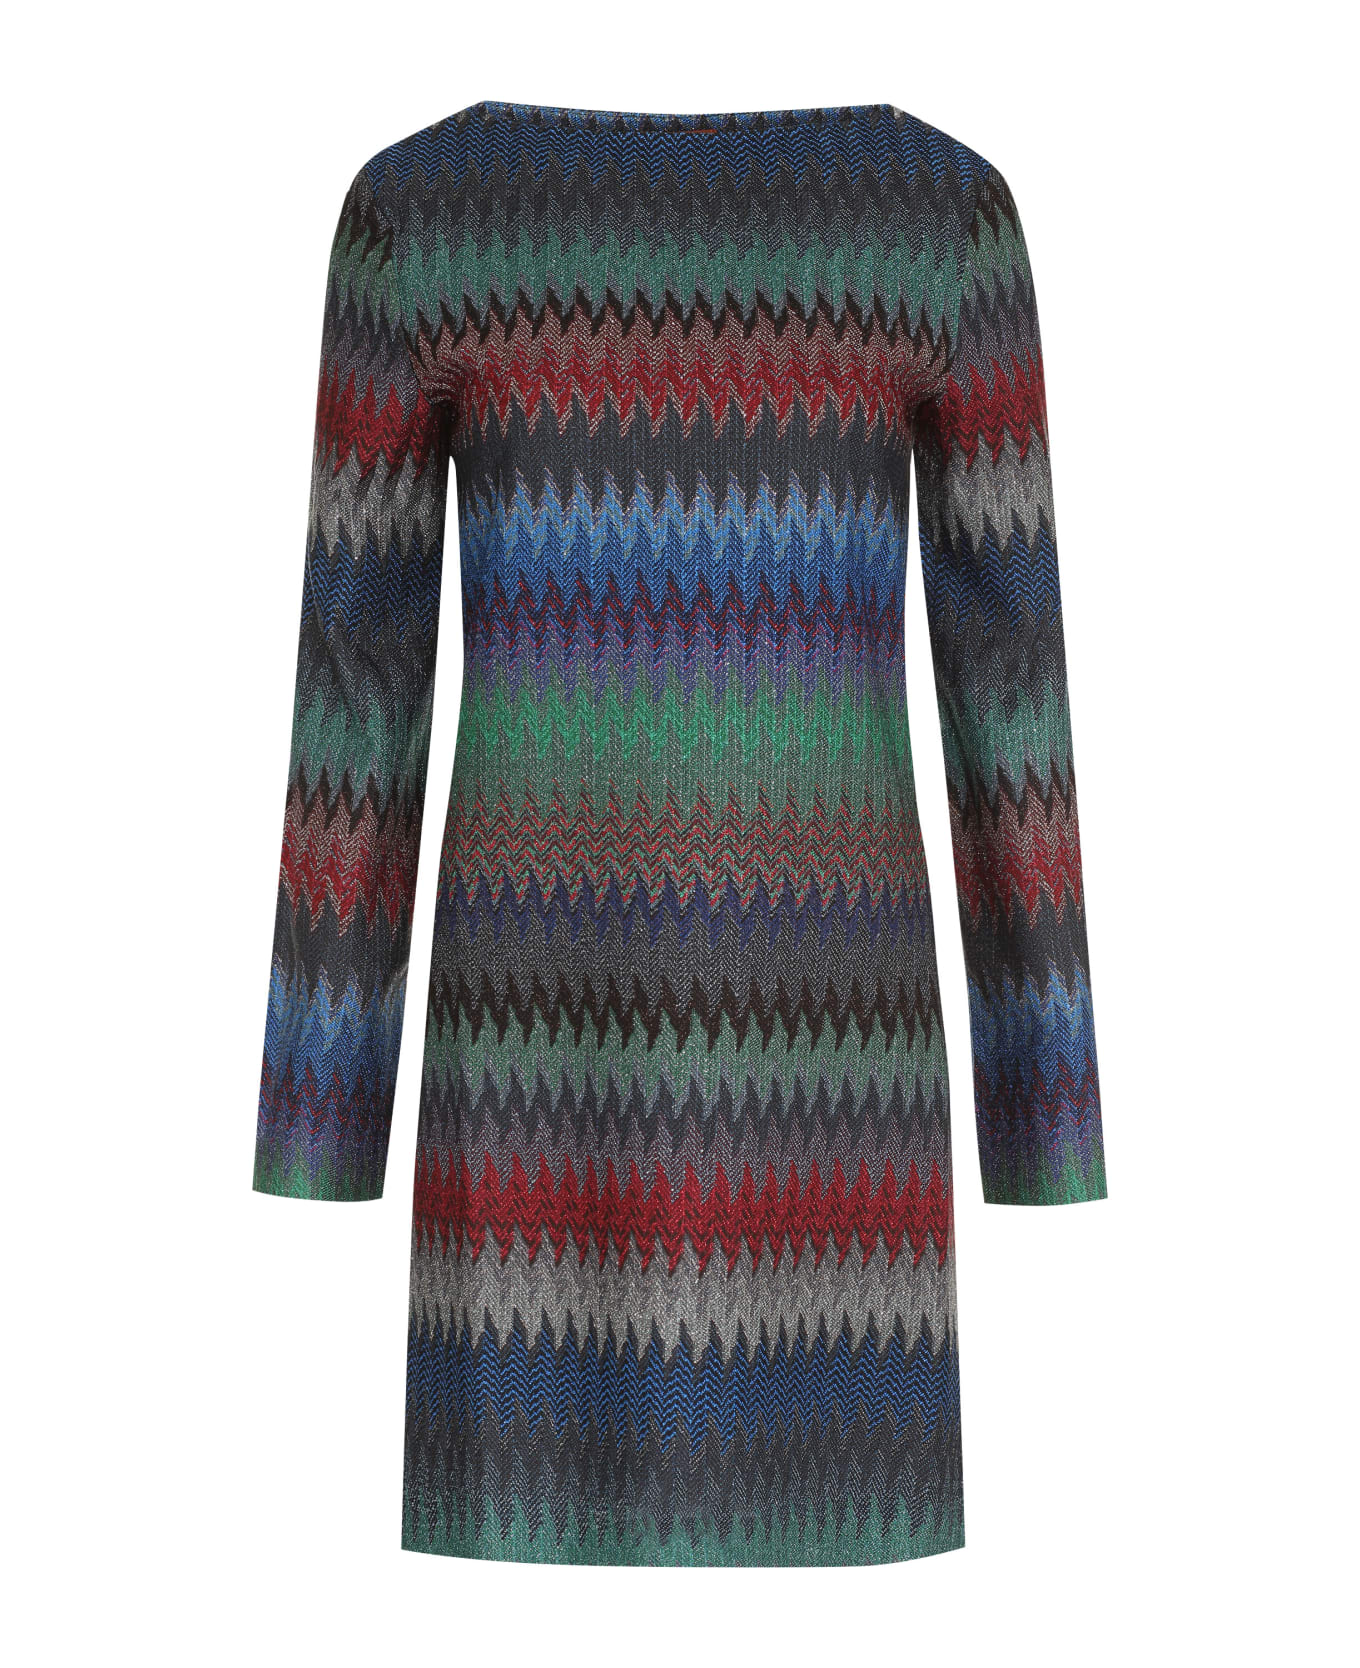 Missoni Chevron Lurex Knit Dress - Multicolor